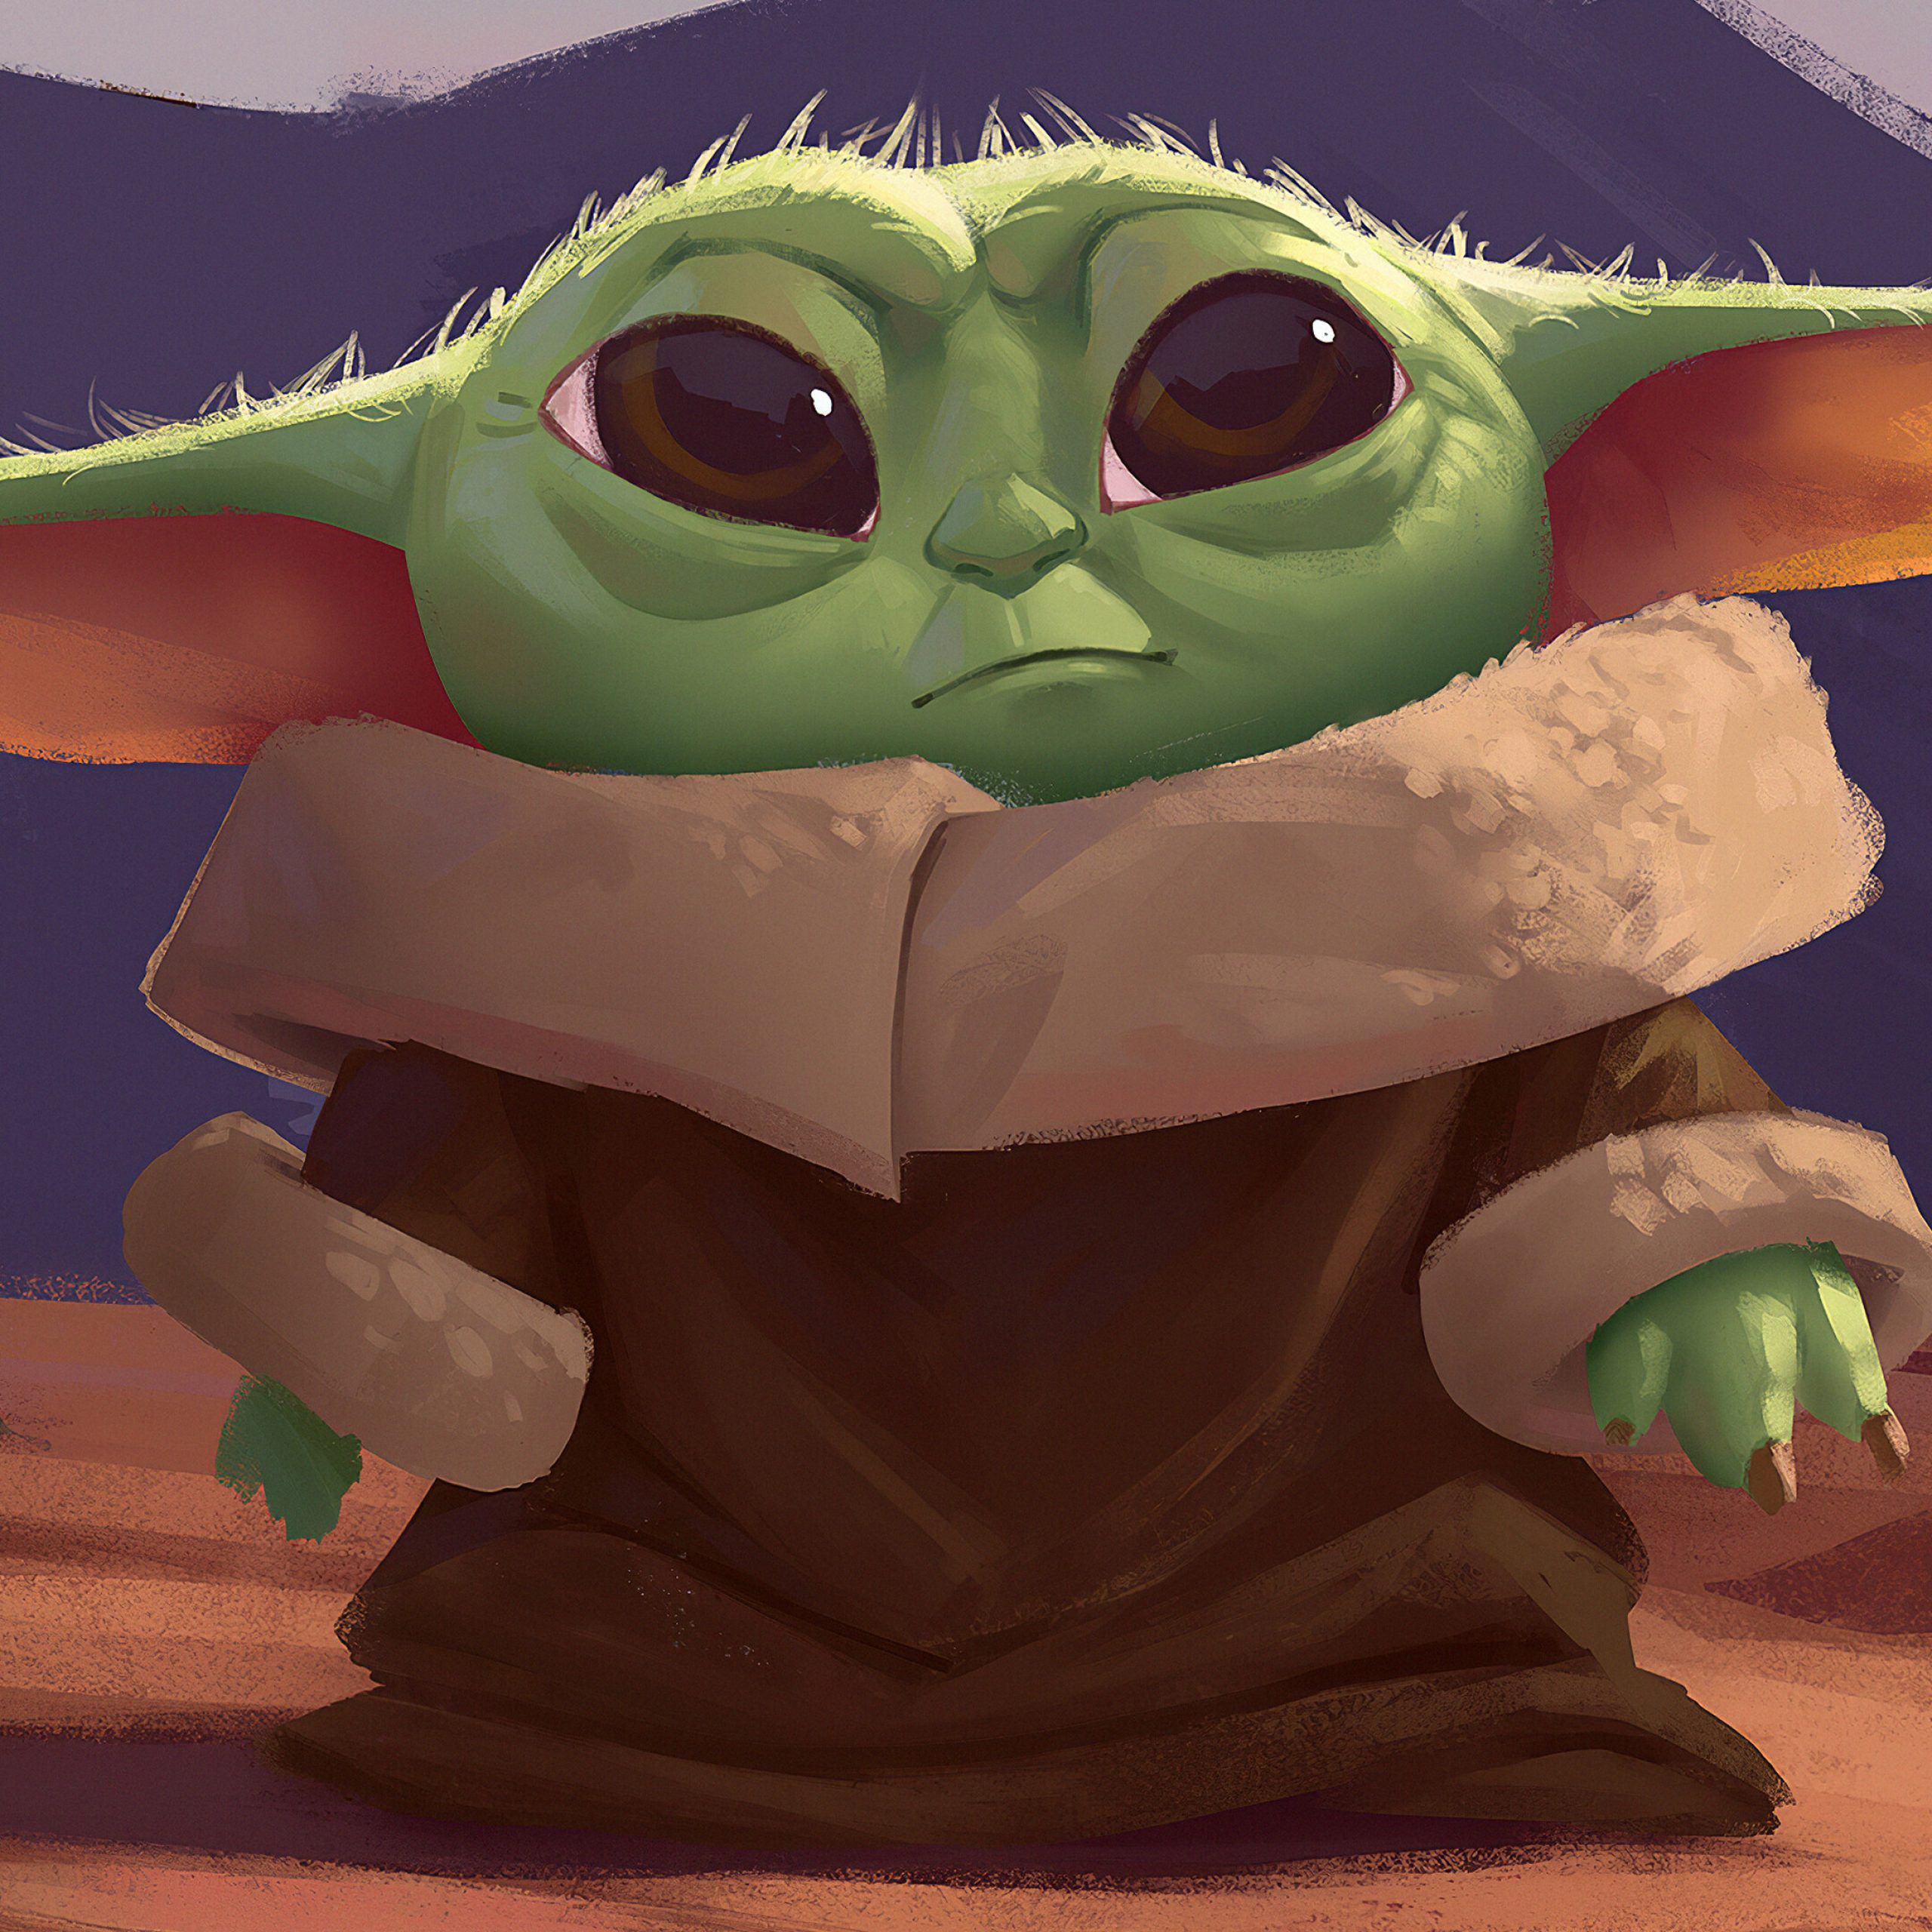  Baby Yoda Hintergrundbild 2560x2560. Baby Yoda Wallpaper